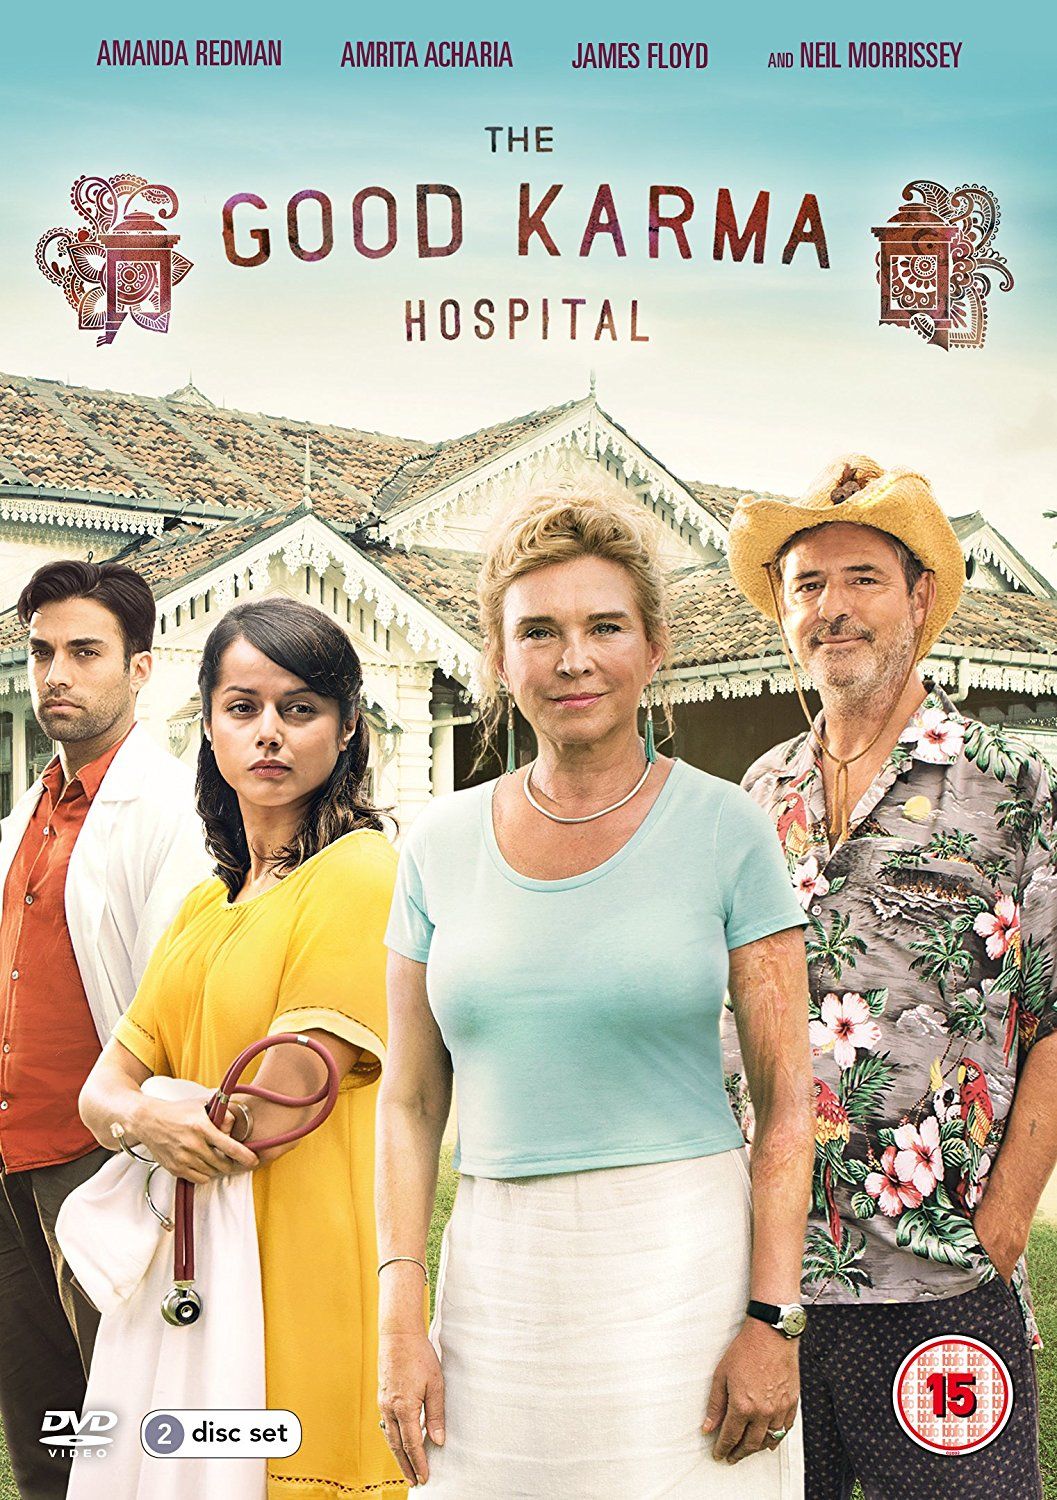 The Good Karma Hospital ne zaman